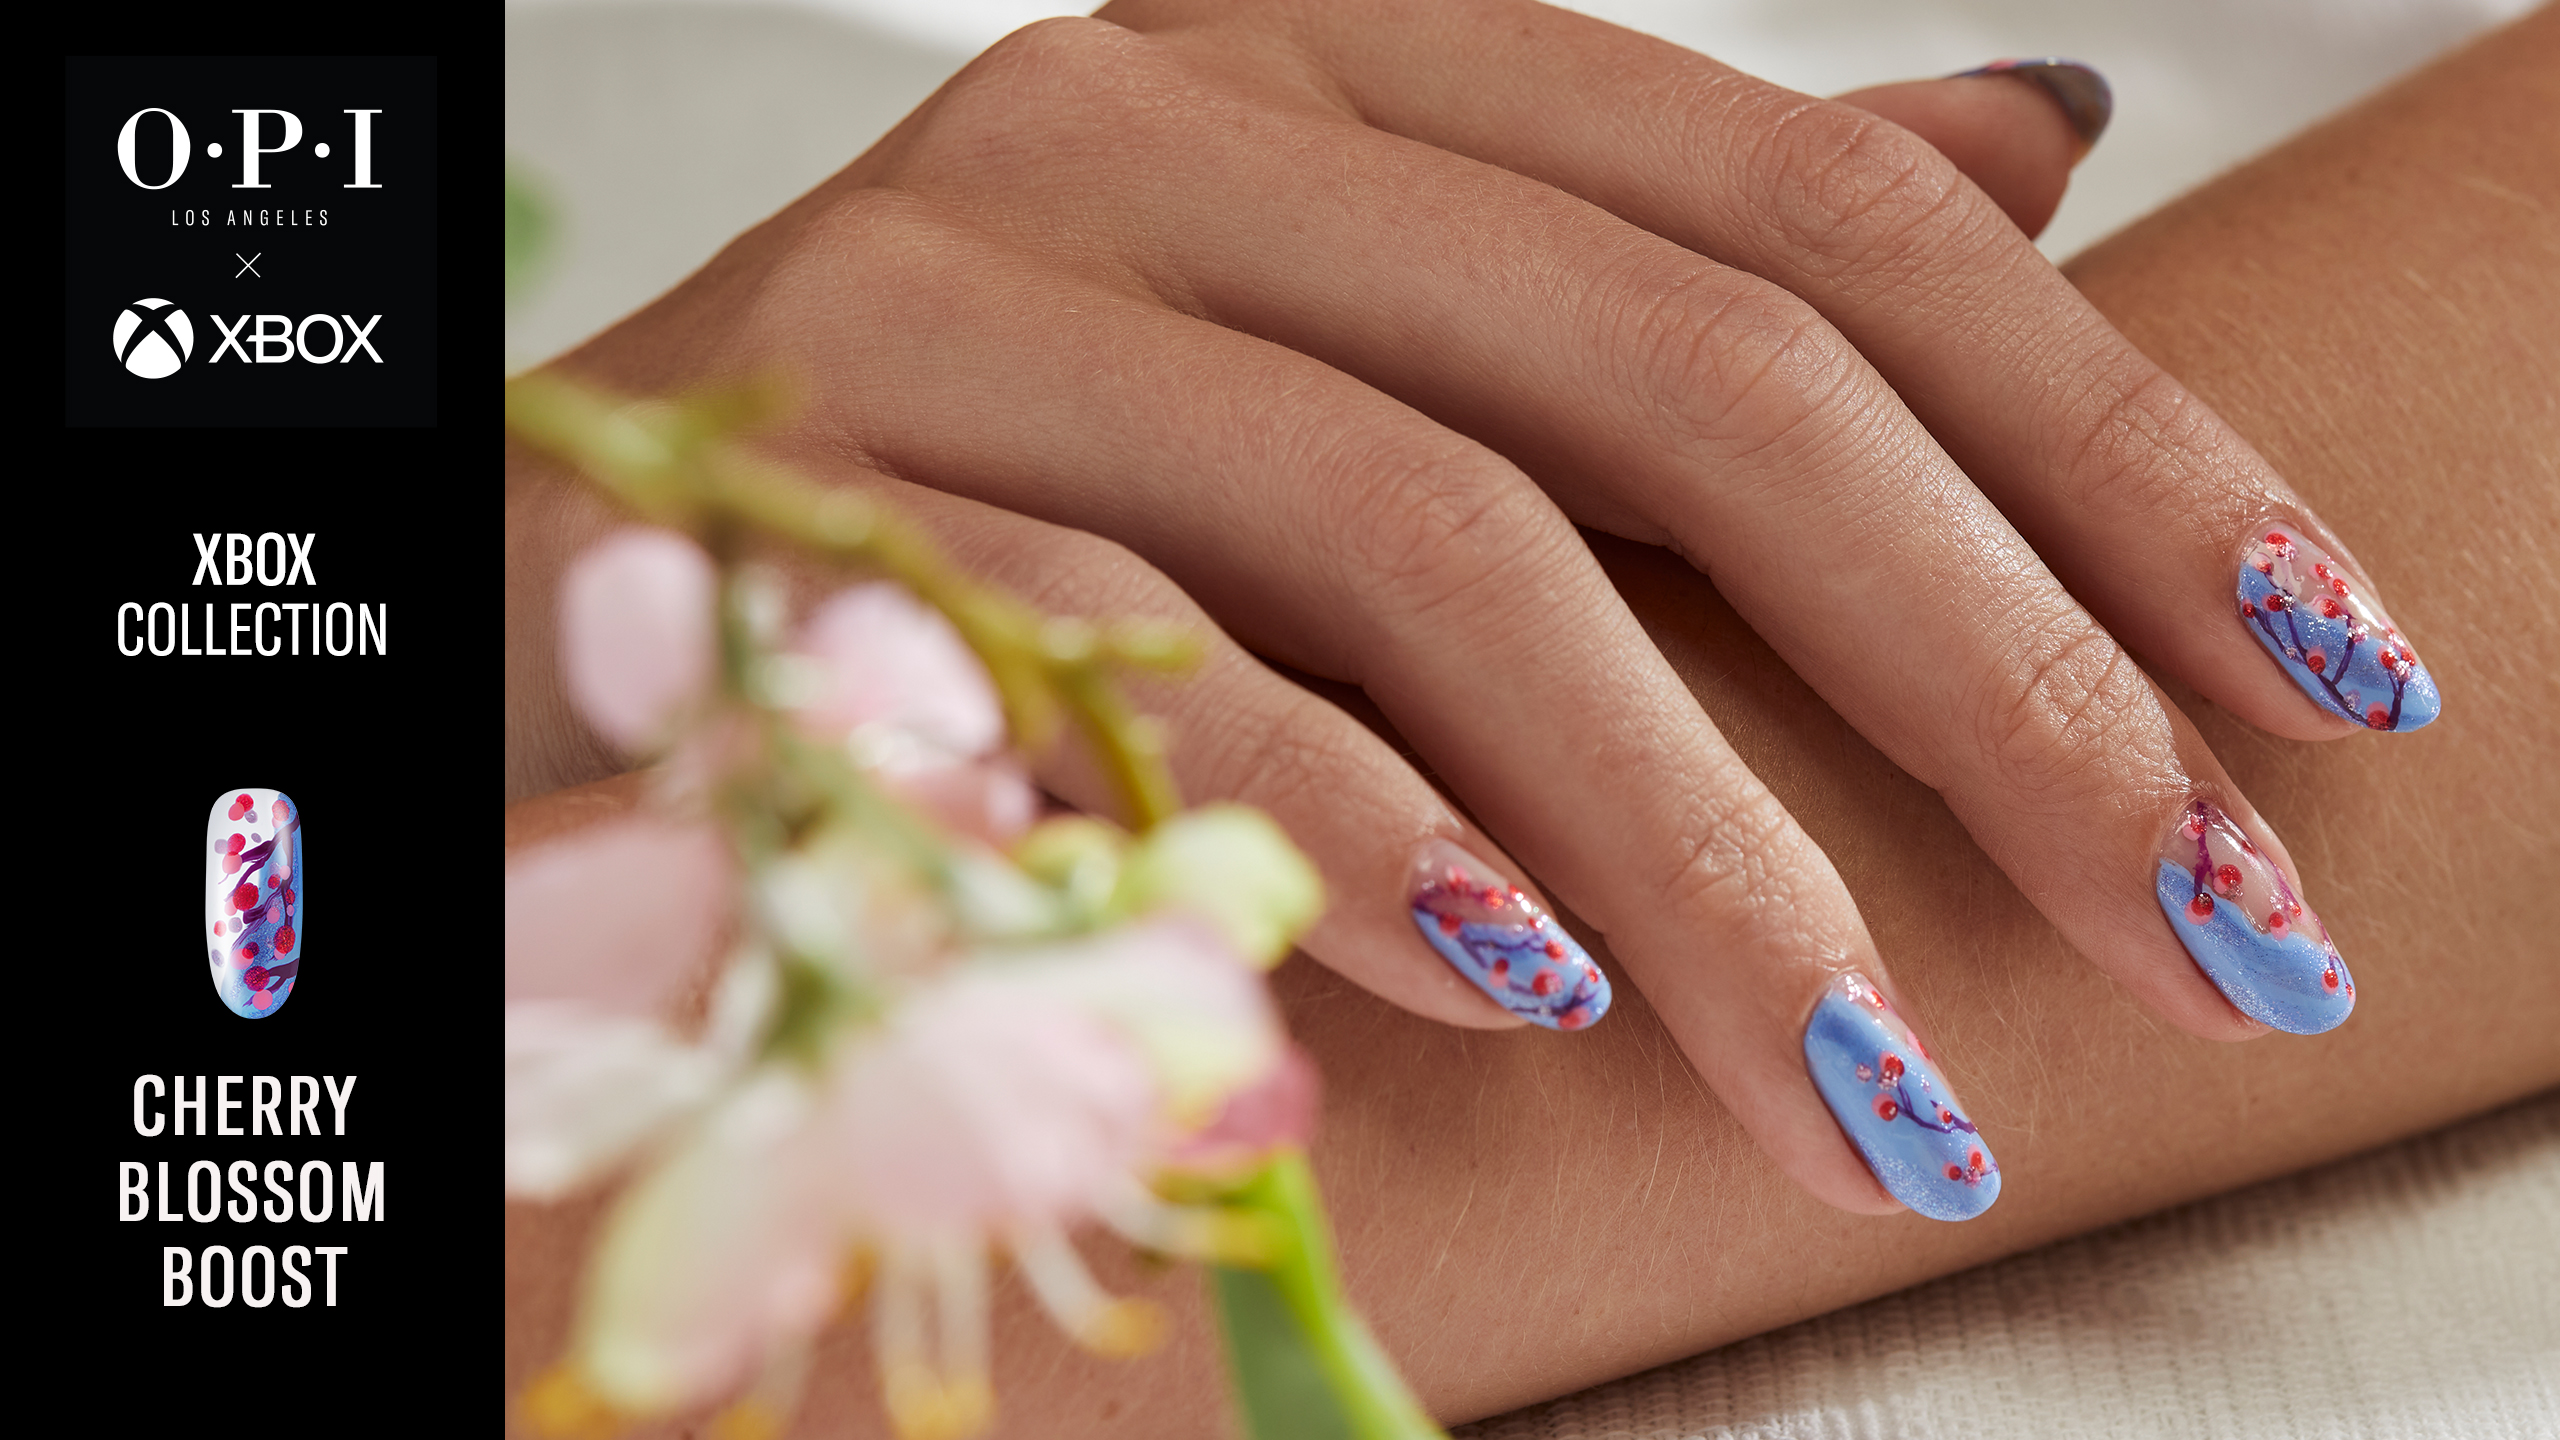 Cherry Blossom Boost DIY Nail Art Video